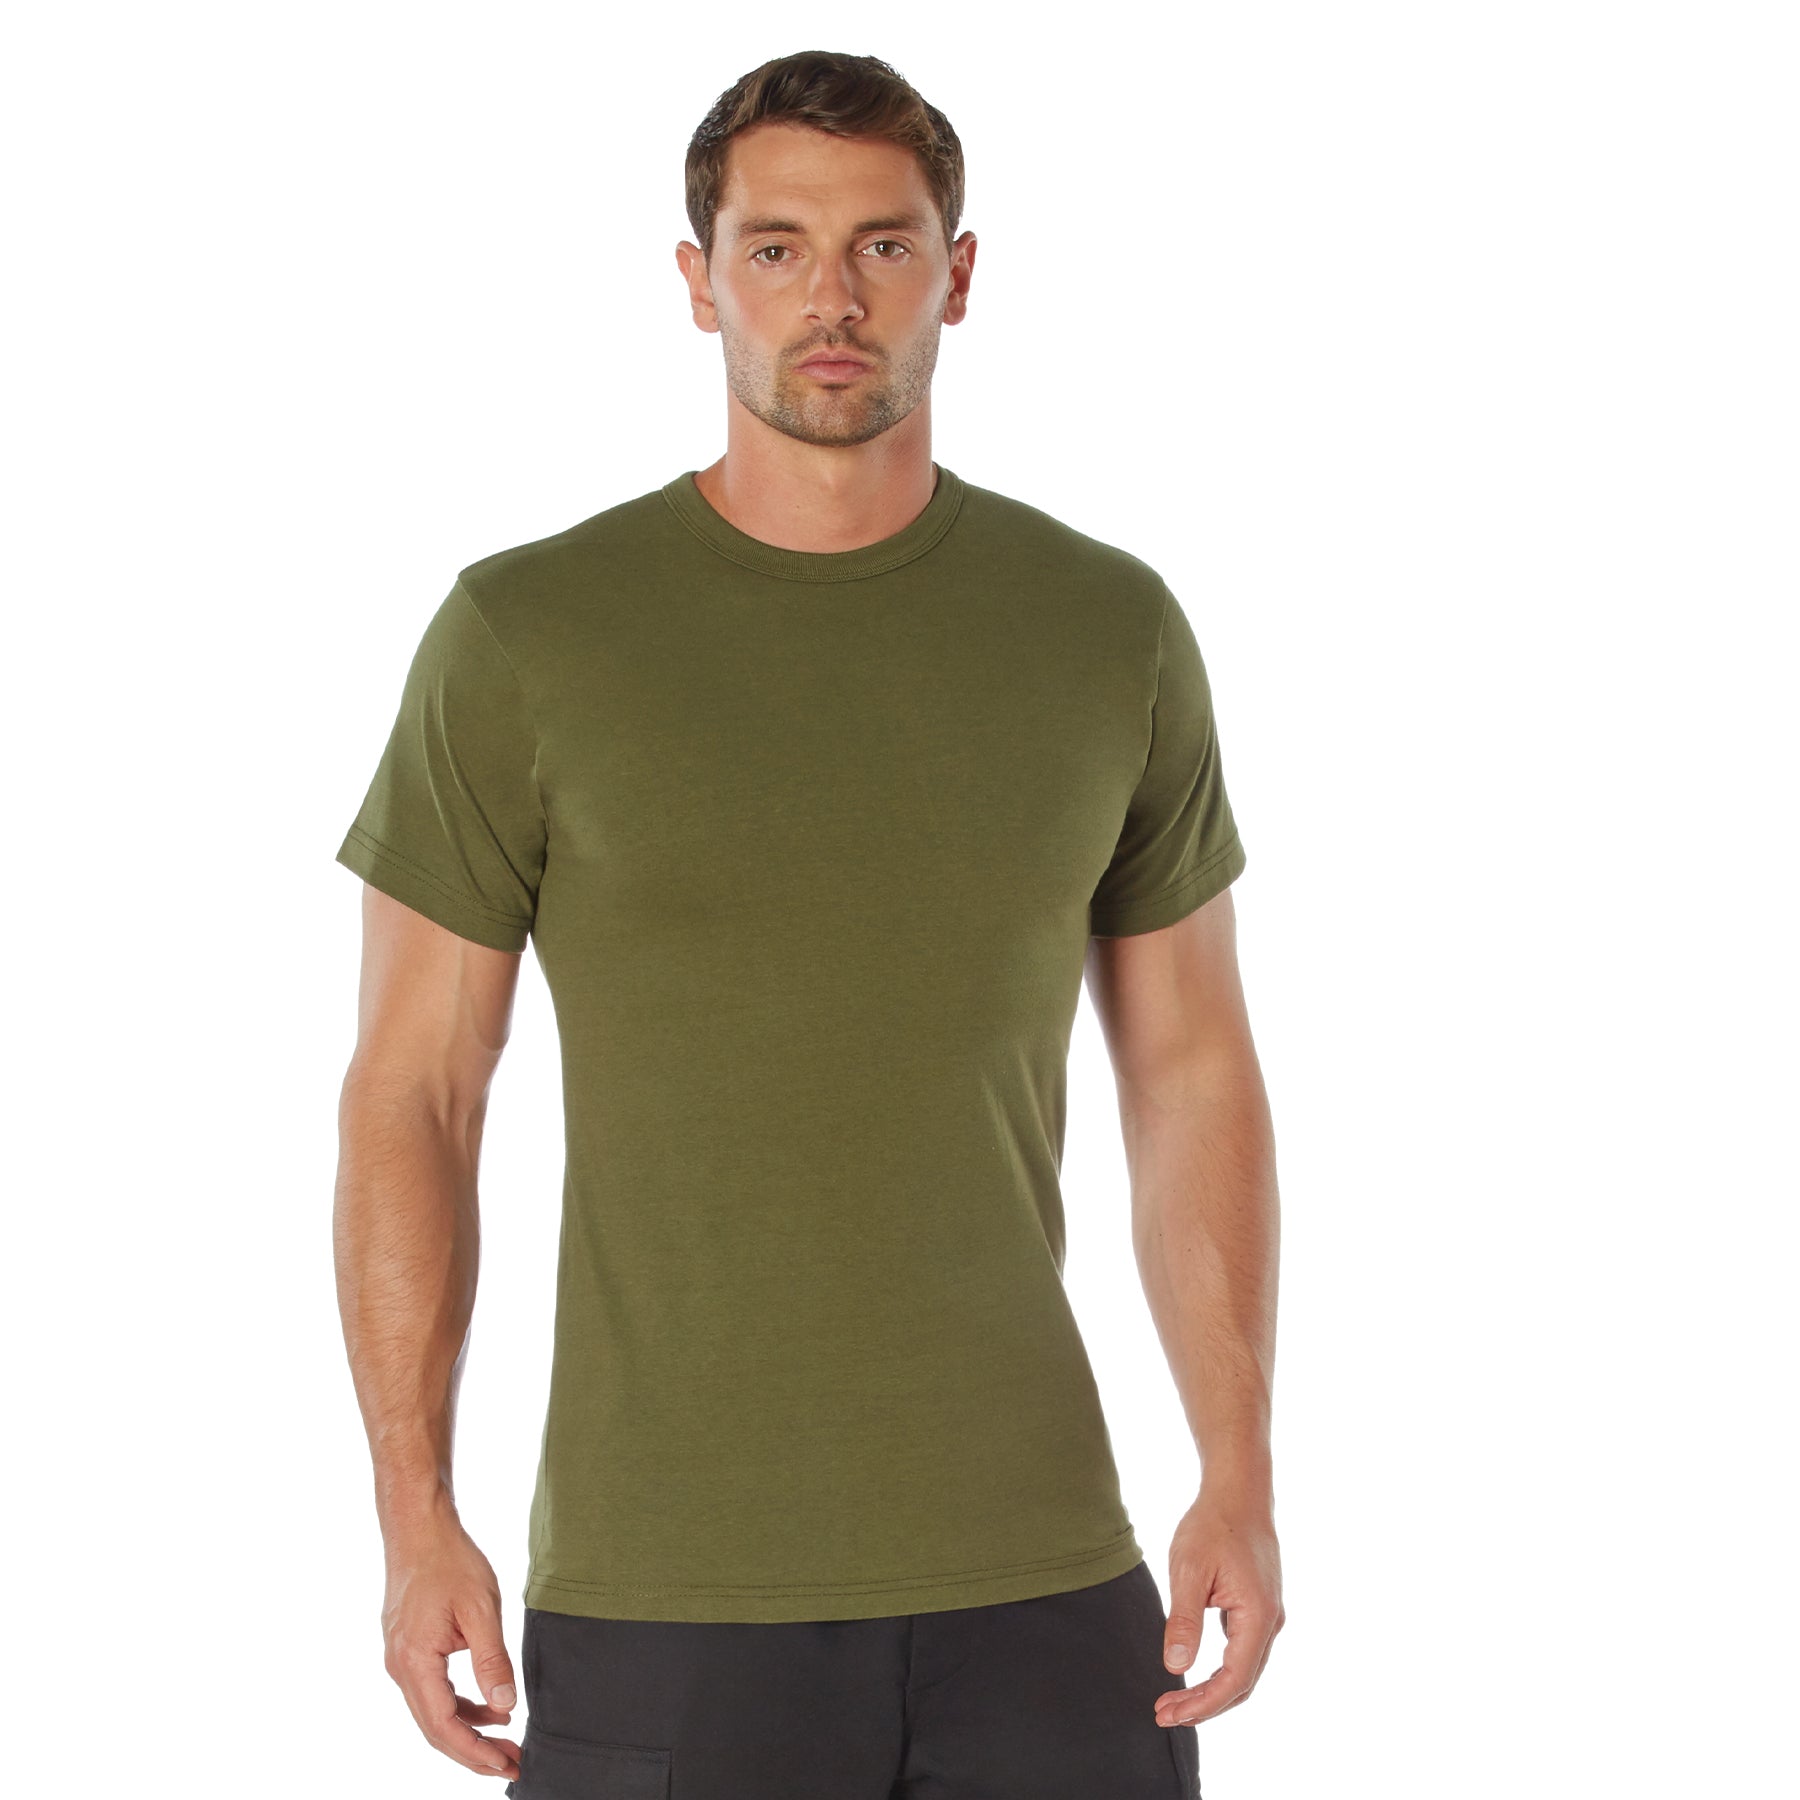 [AR 670-1] Poly/Cotton Heavyweight T-Shirts Olive Drab